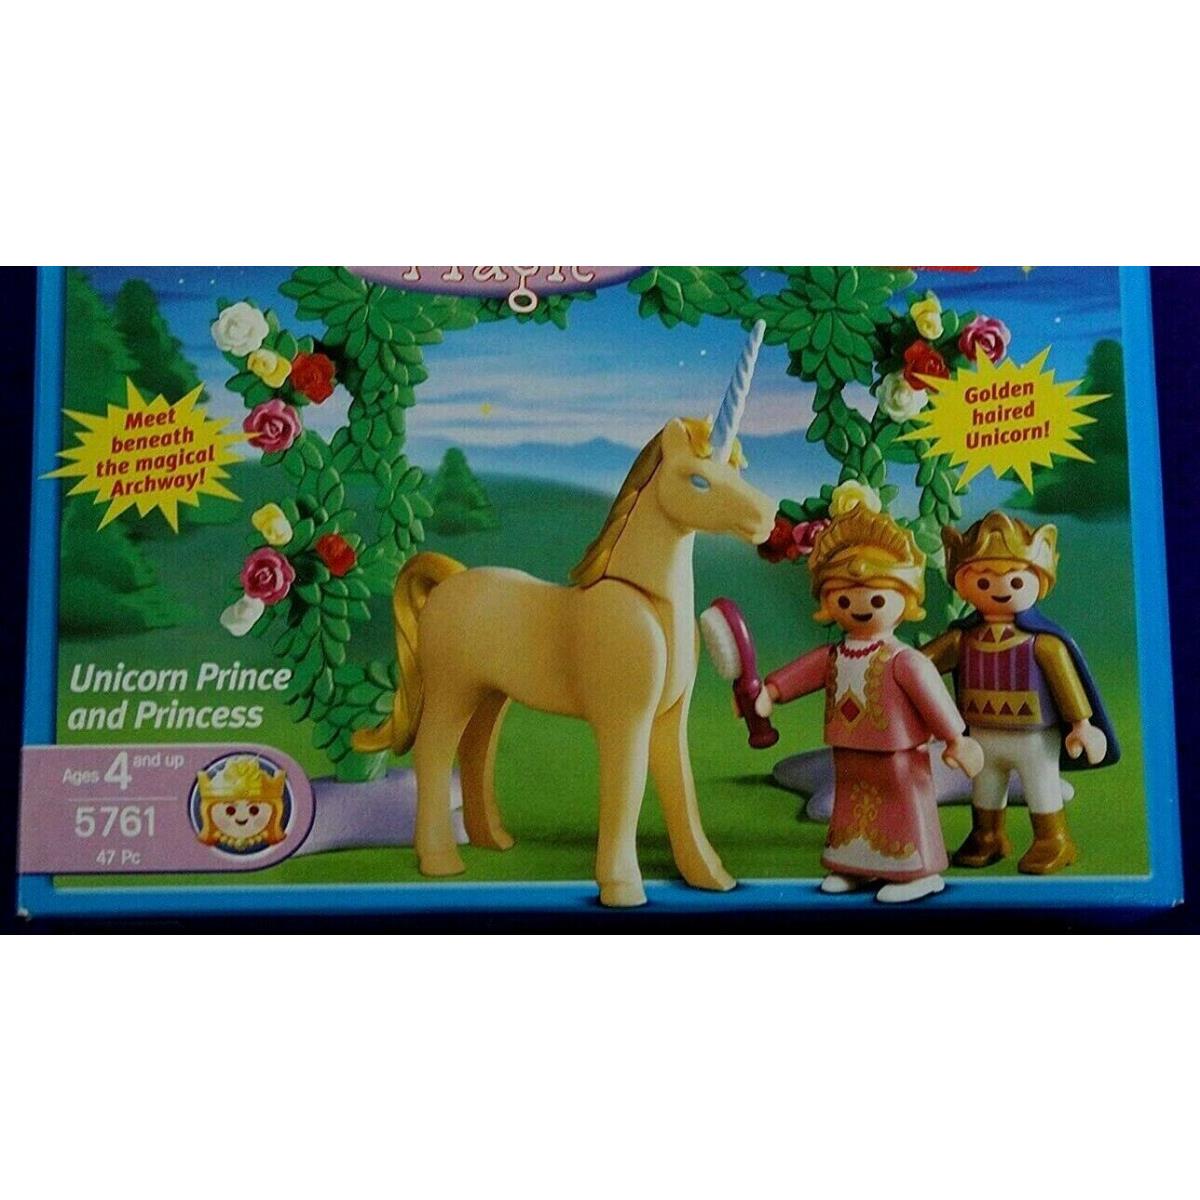 Playmobil 5761 Unicorn Prince and Princess with Unicorn and Archway